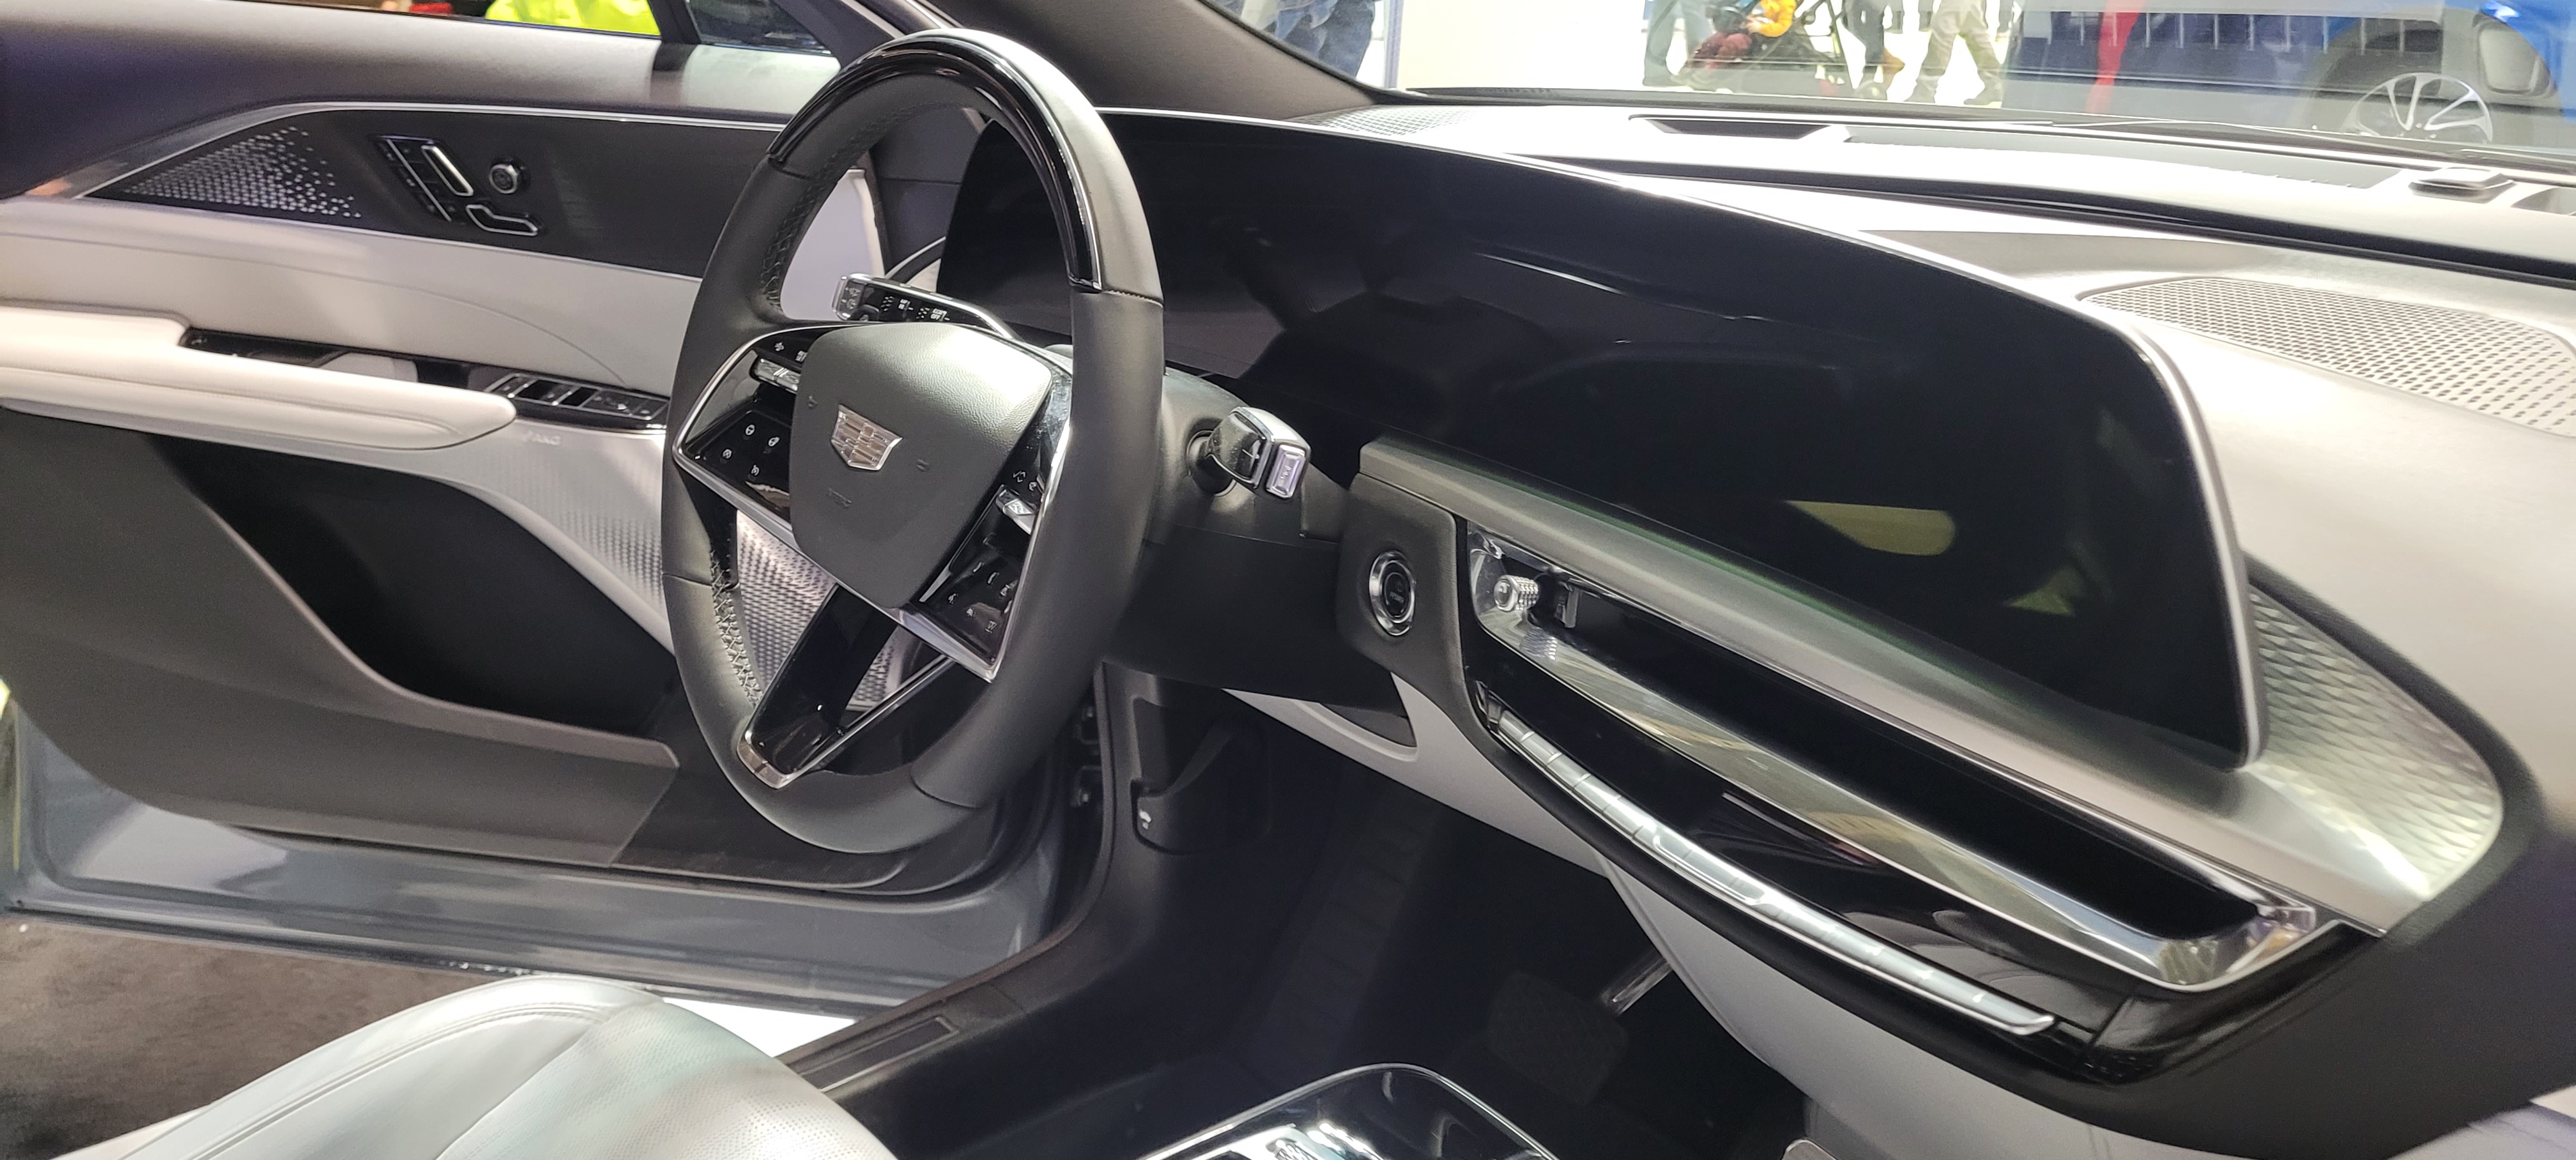 2022 Montreal Electric Vehicle Show: Cadillac Lyriq Interior